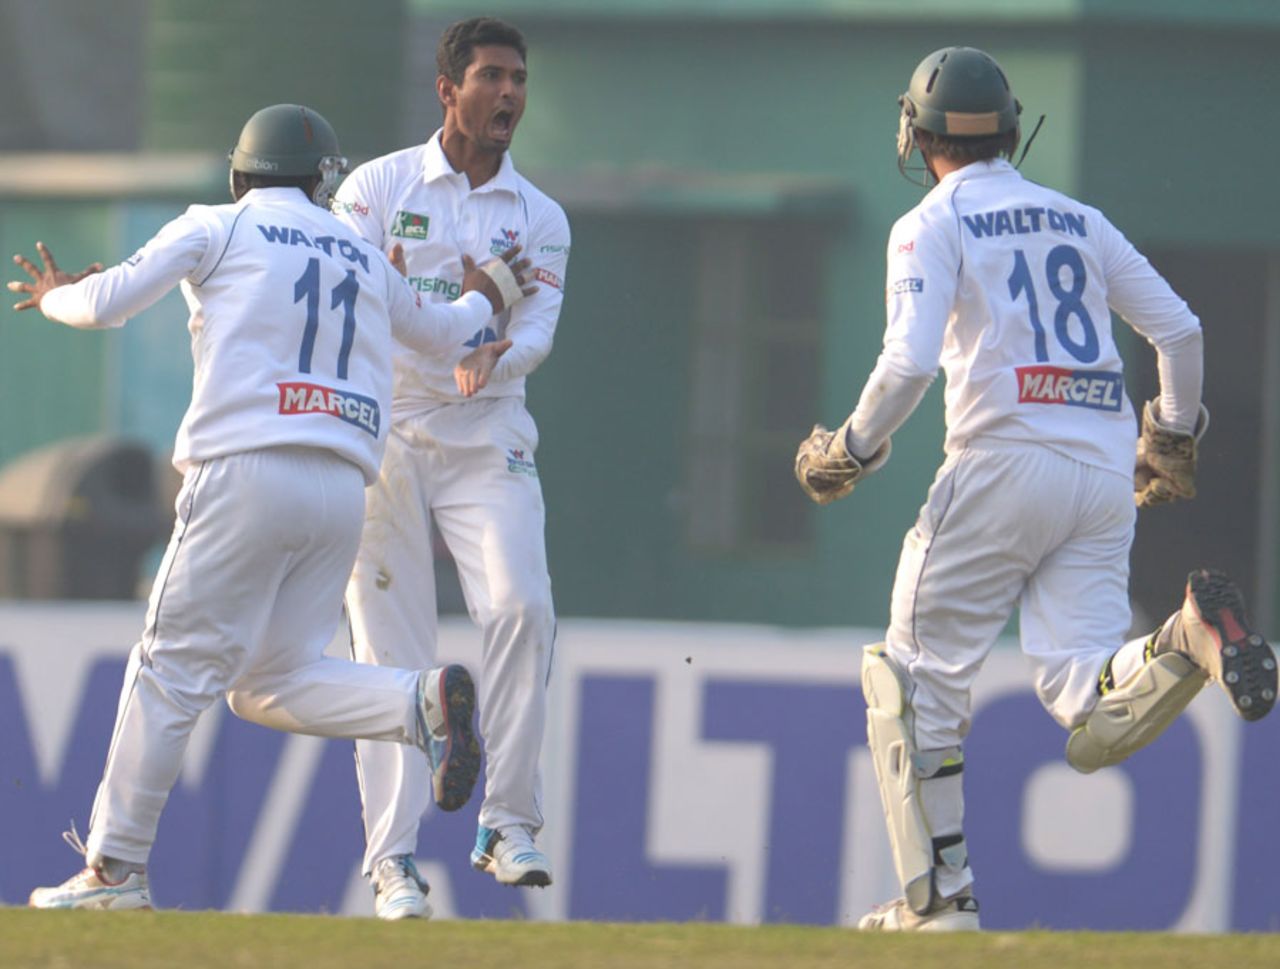 Mahmudullah celebrates a wicket with team-mates, Central Zone v South Zone, Bangladesh Cricket League, 4th day, Savar, January 21, 2014